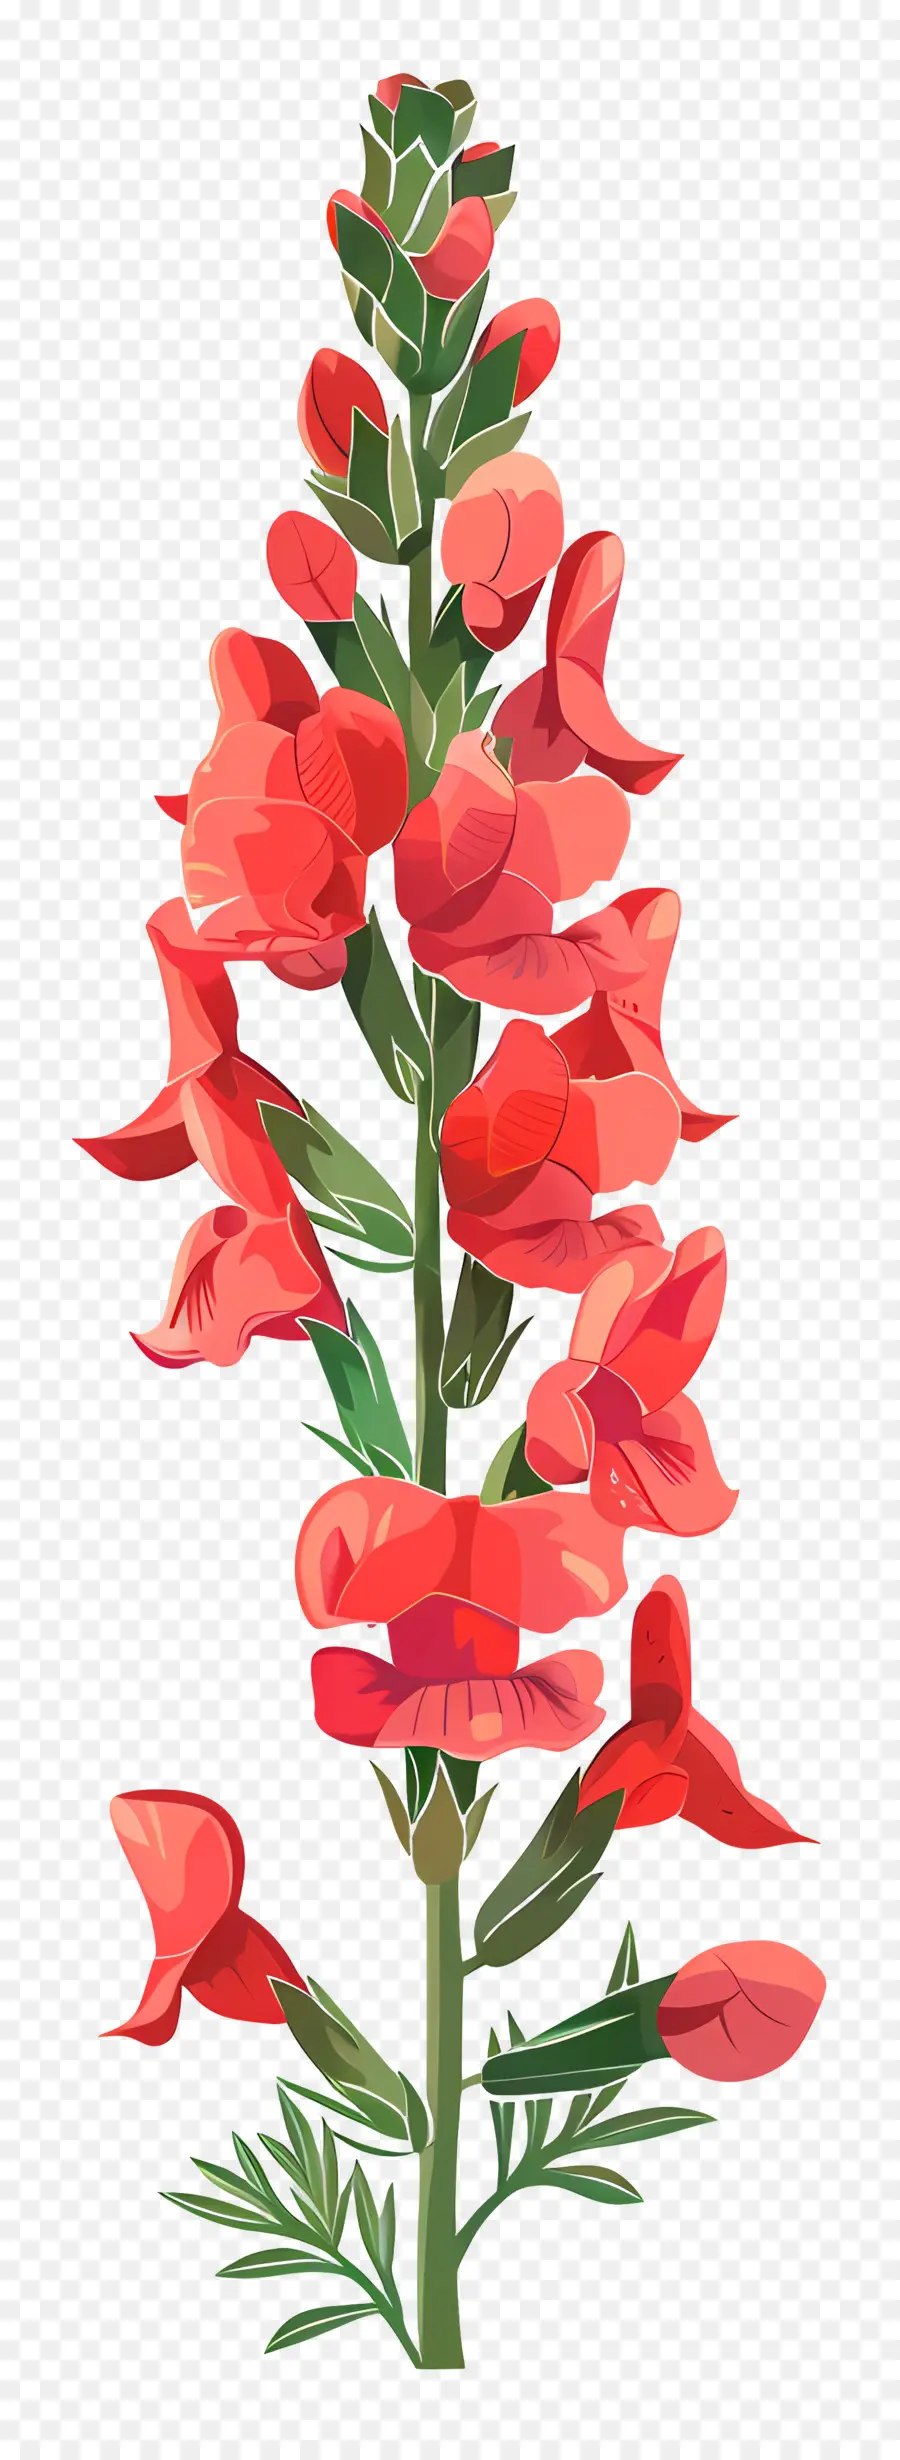 Bunga Snapdragon，Lupin Merah PNG